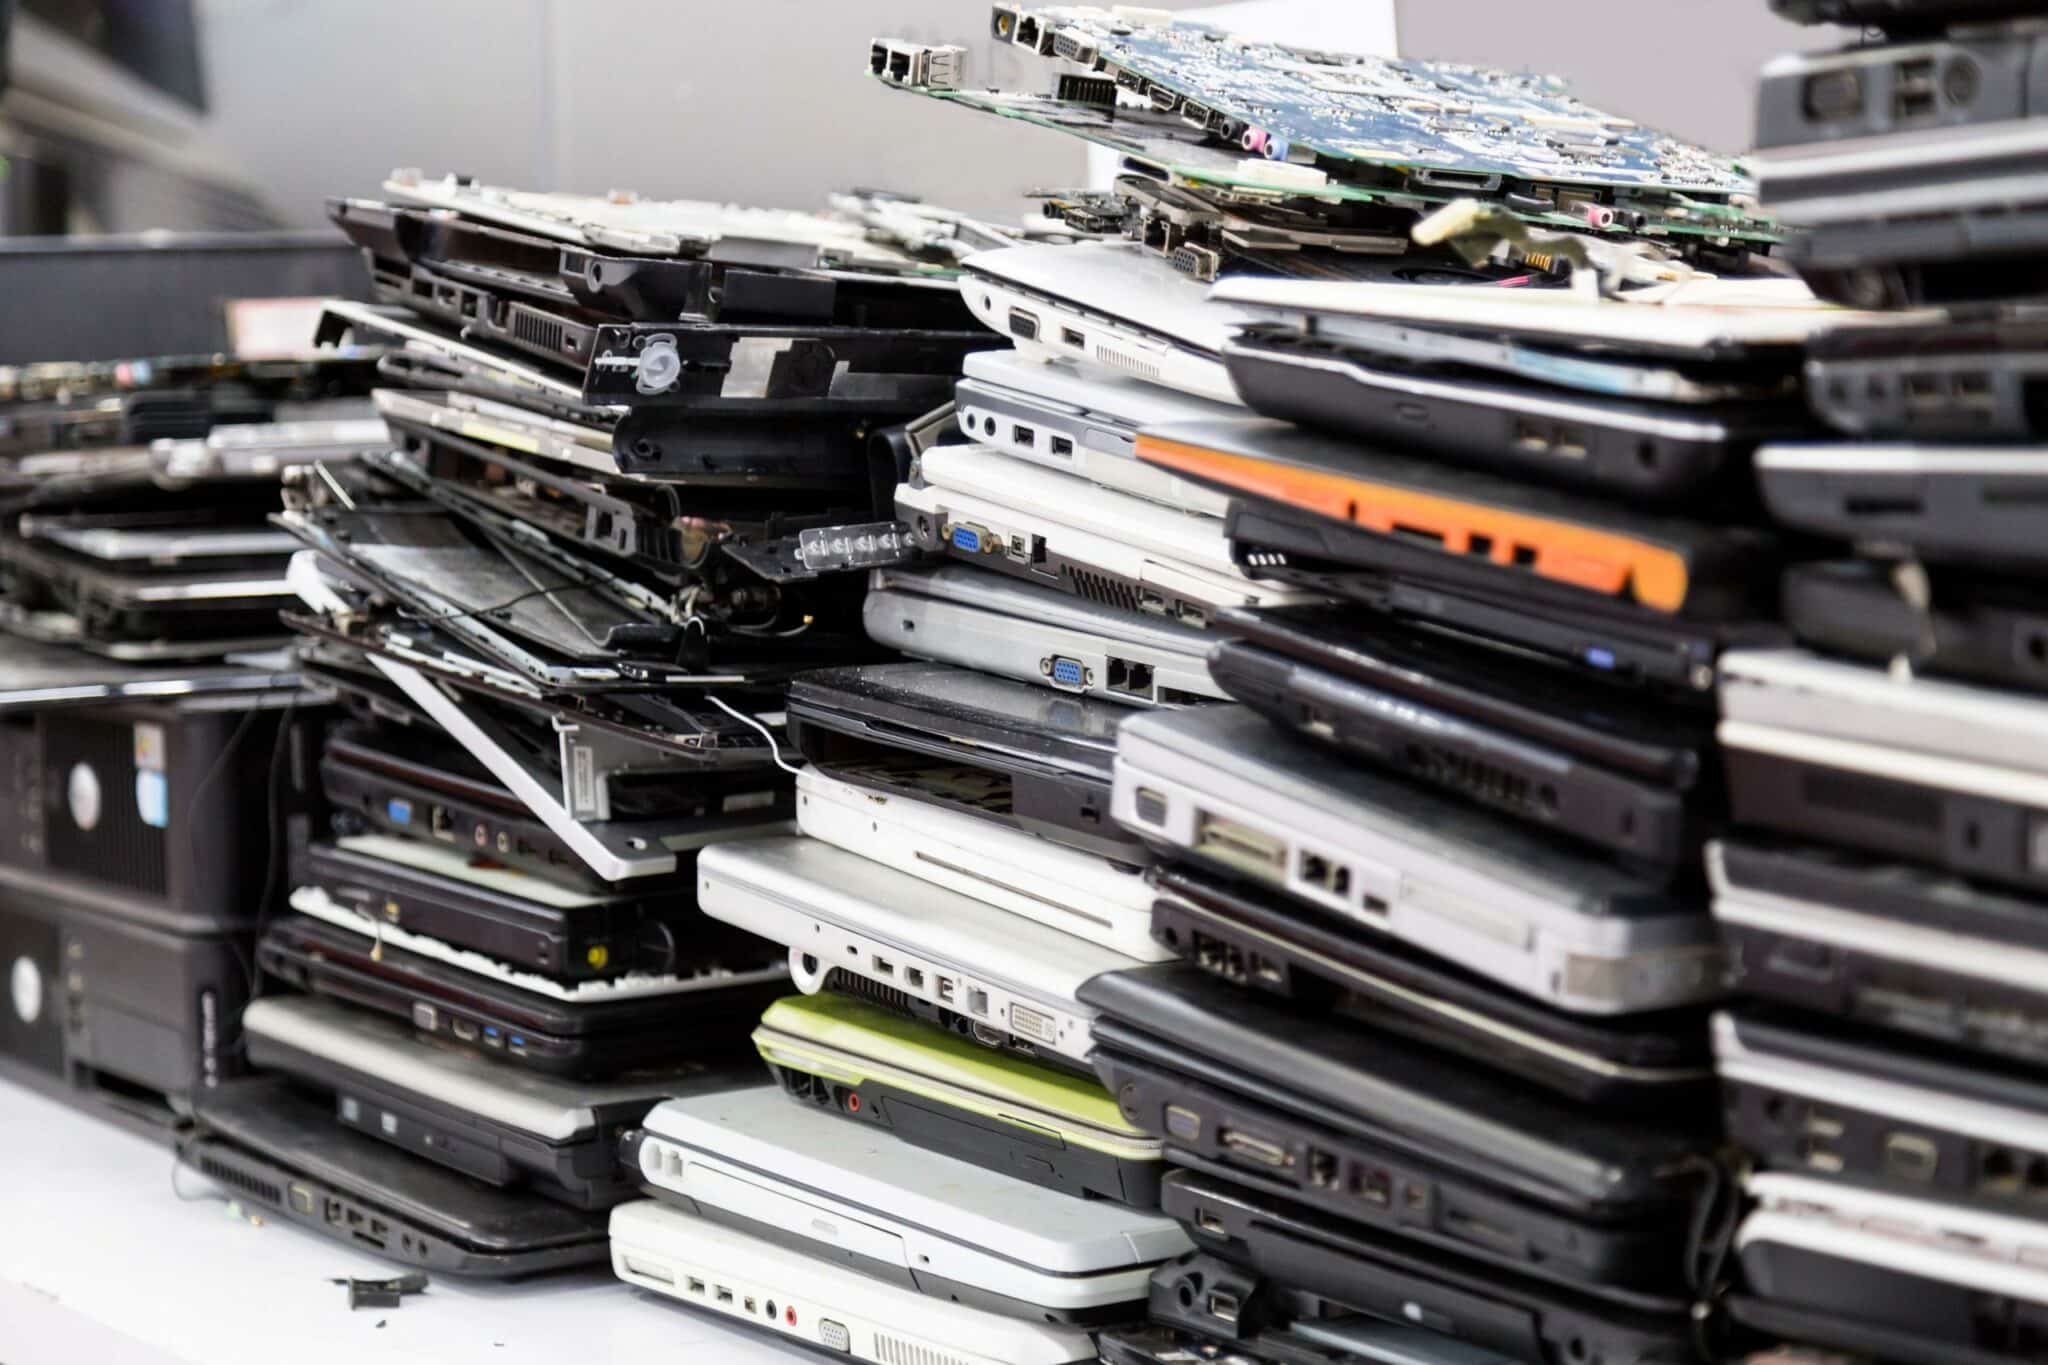 Stacks of broken laptops